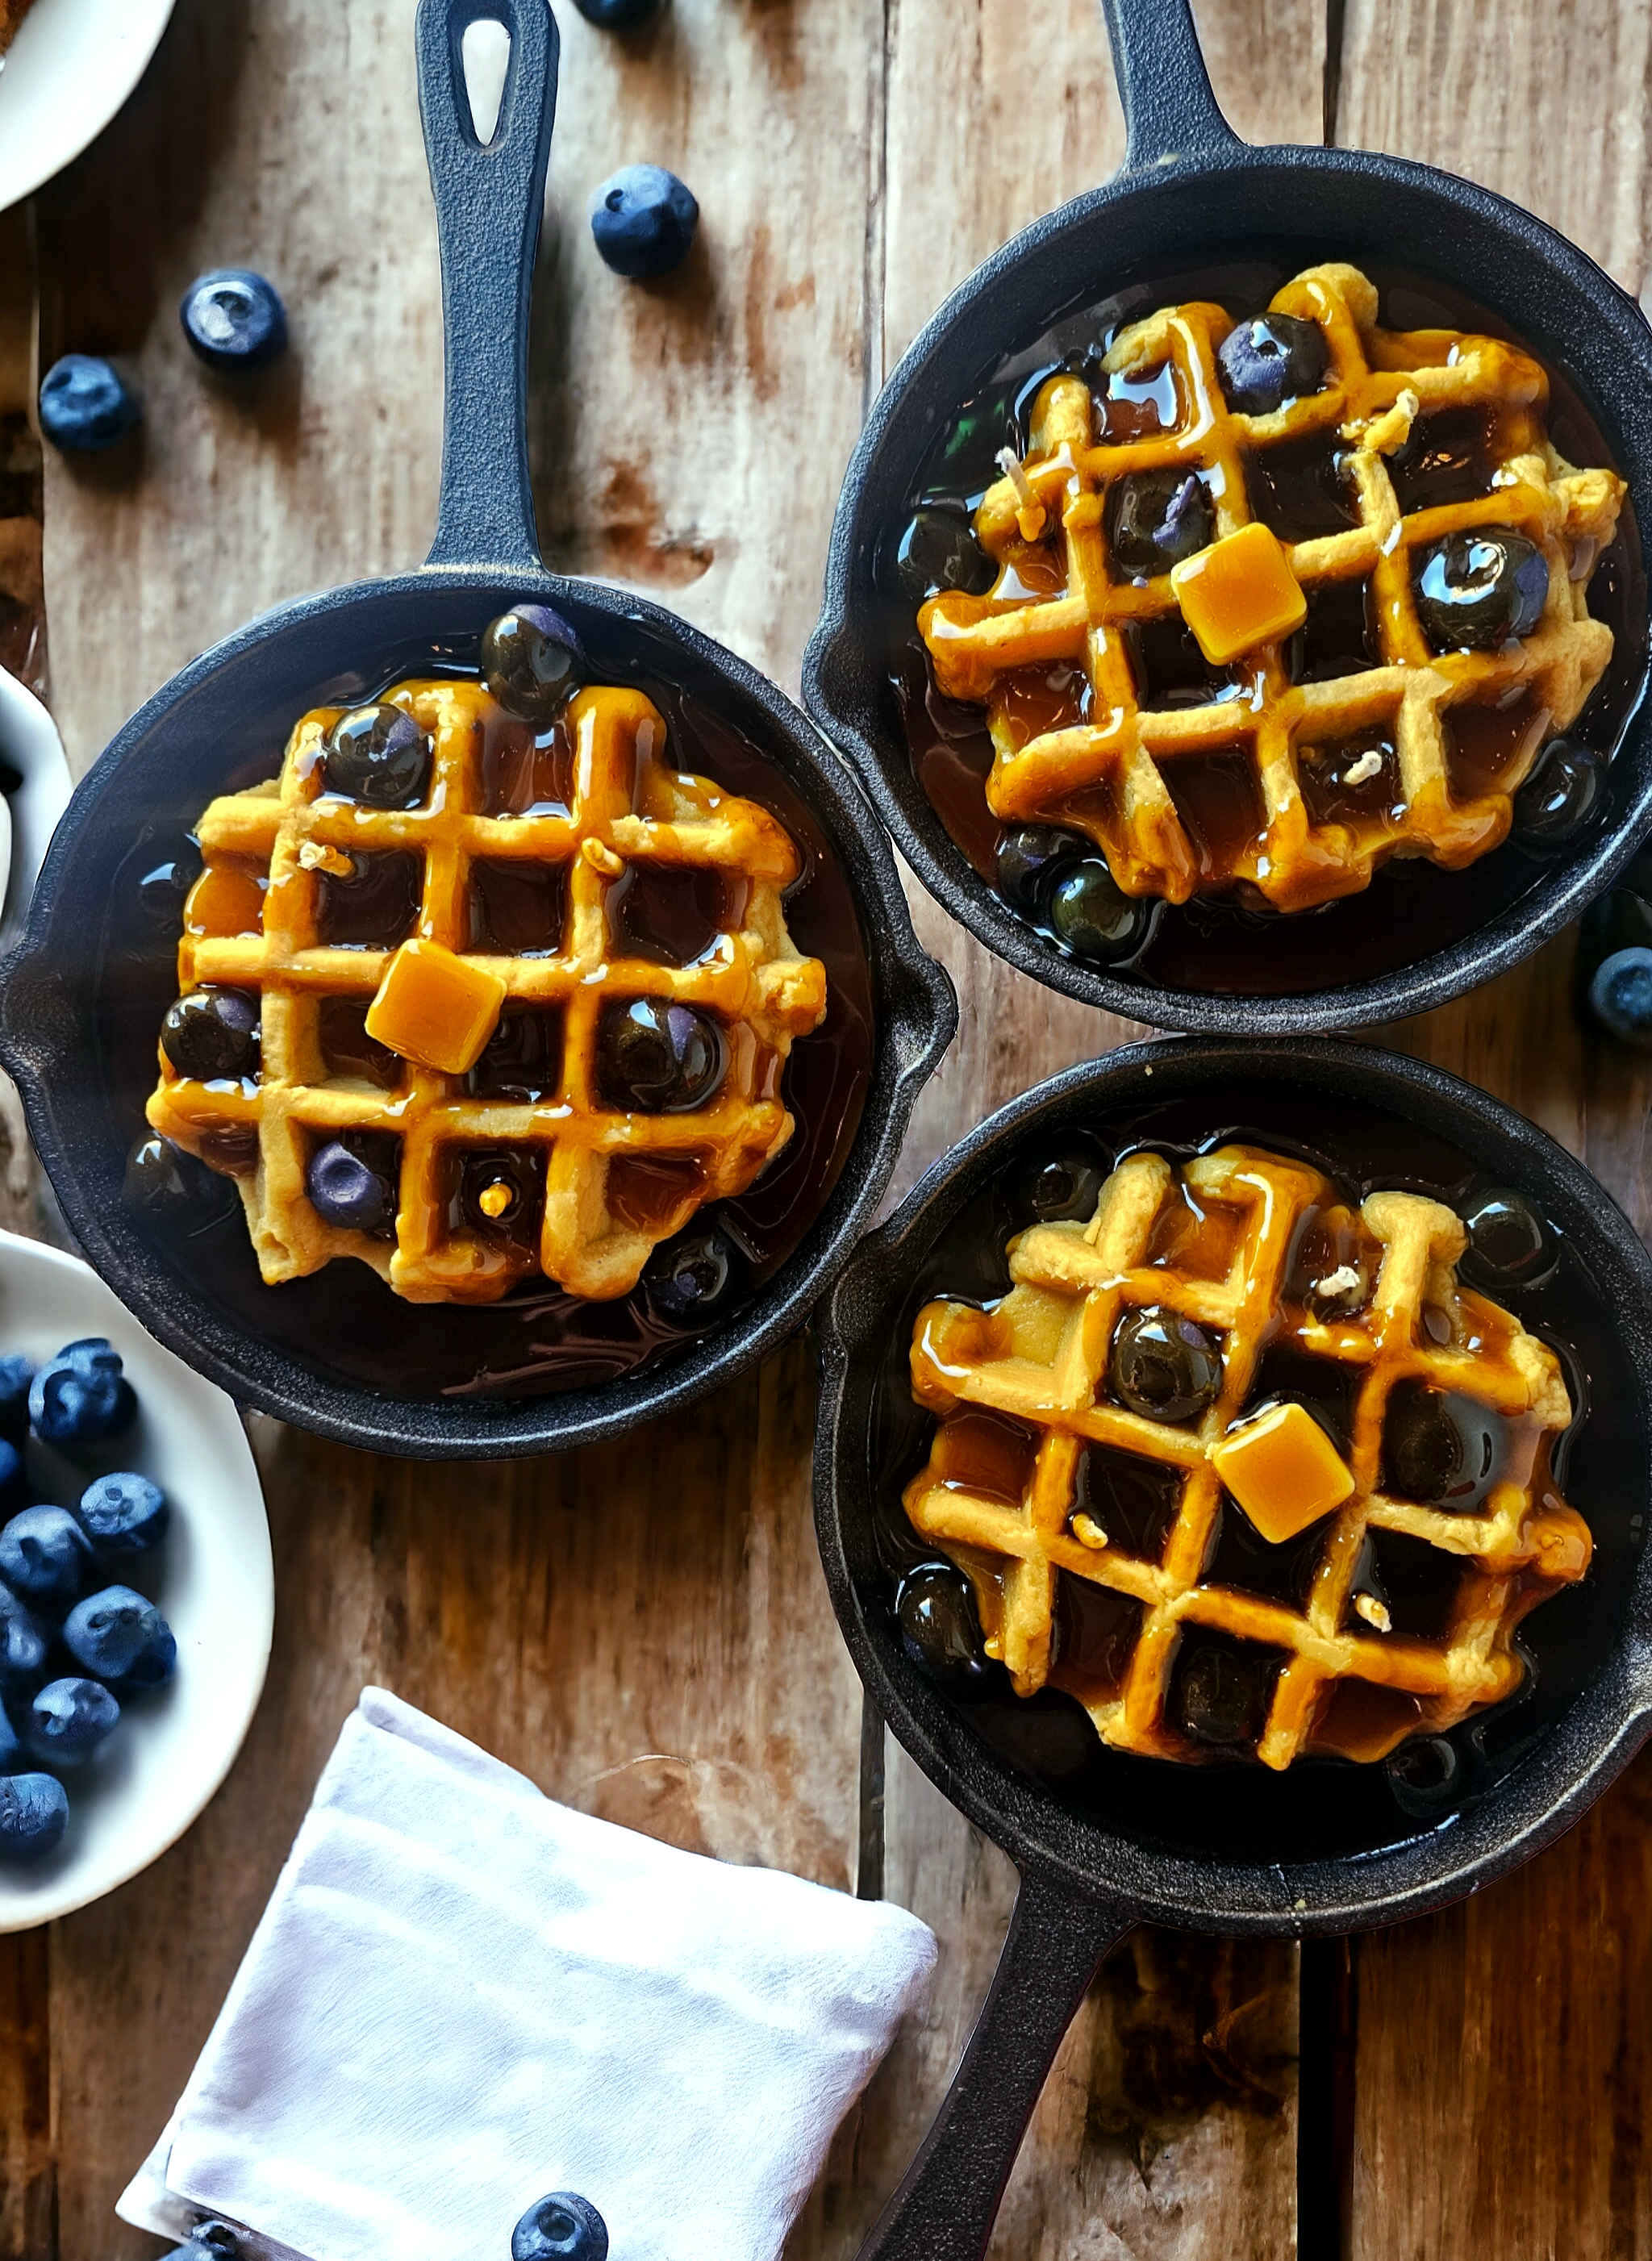 Blueberry and Waffle Wax Melts / Food Like Wax Melts